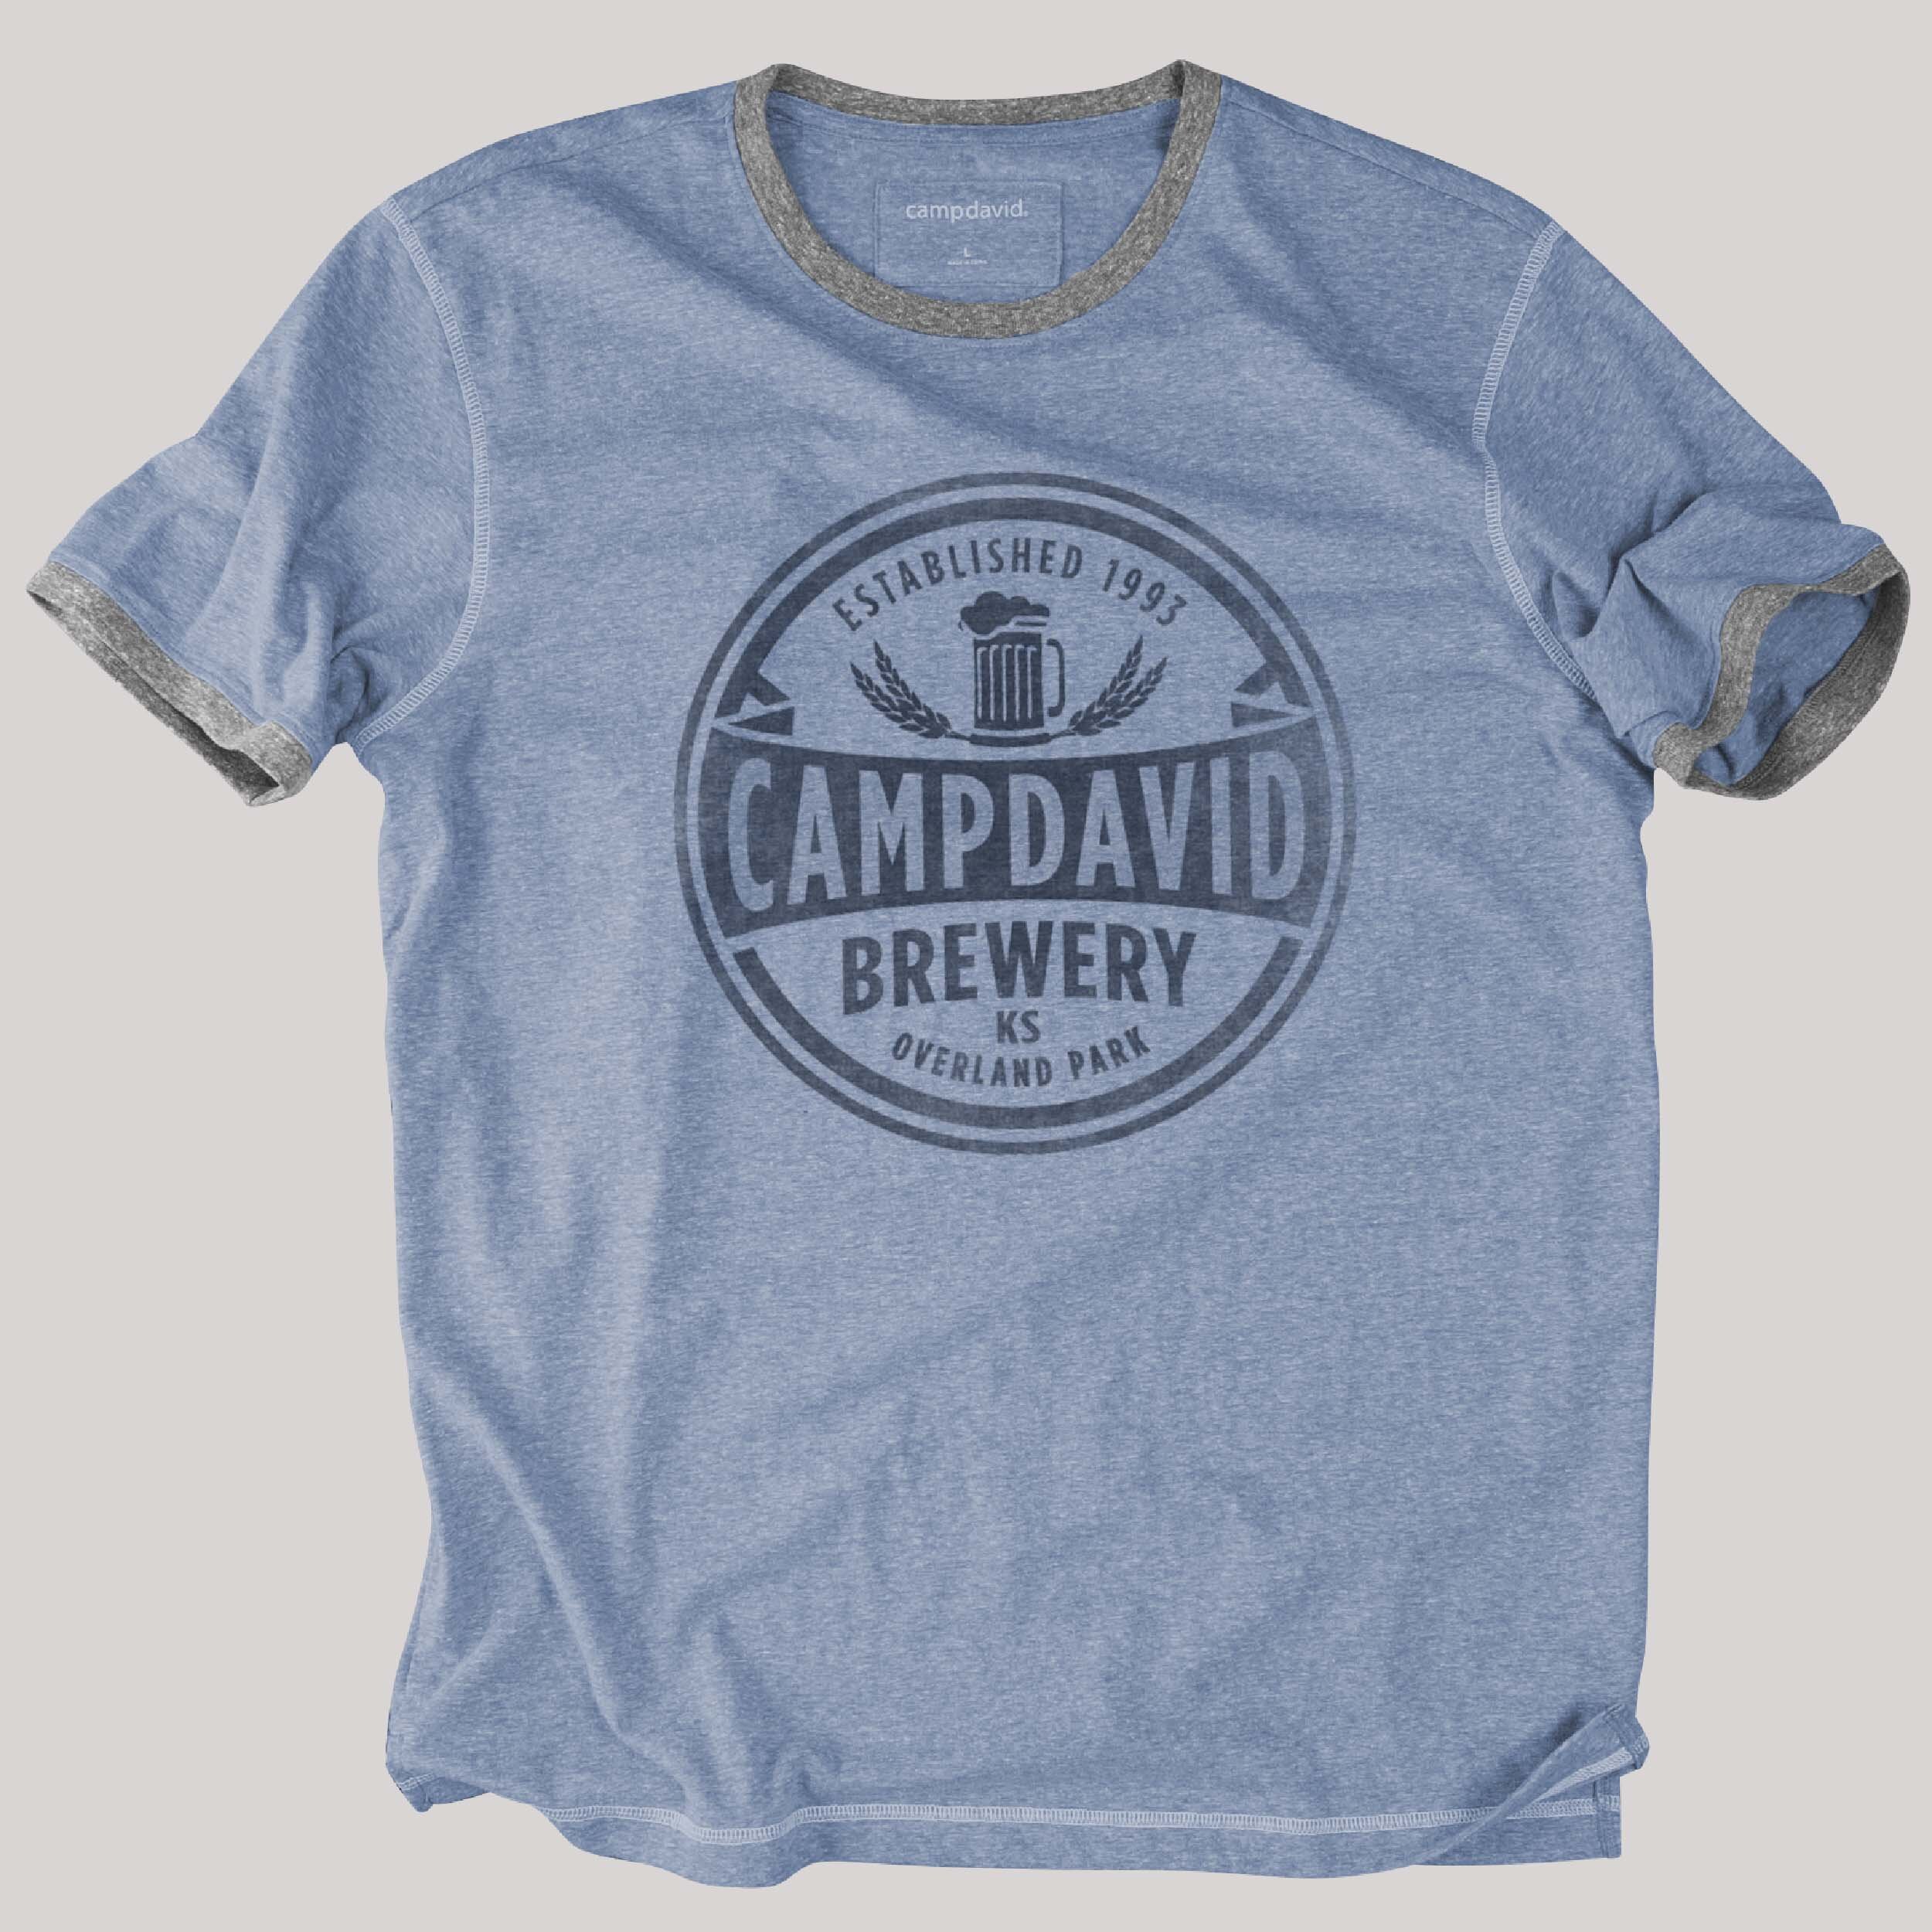 Camp David — Brewery